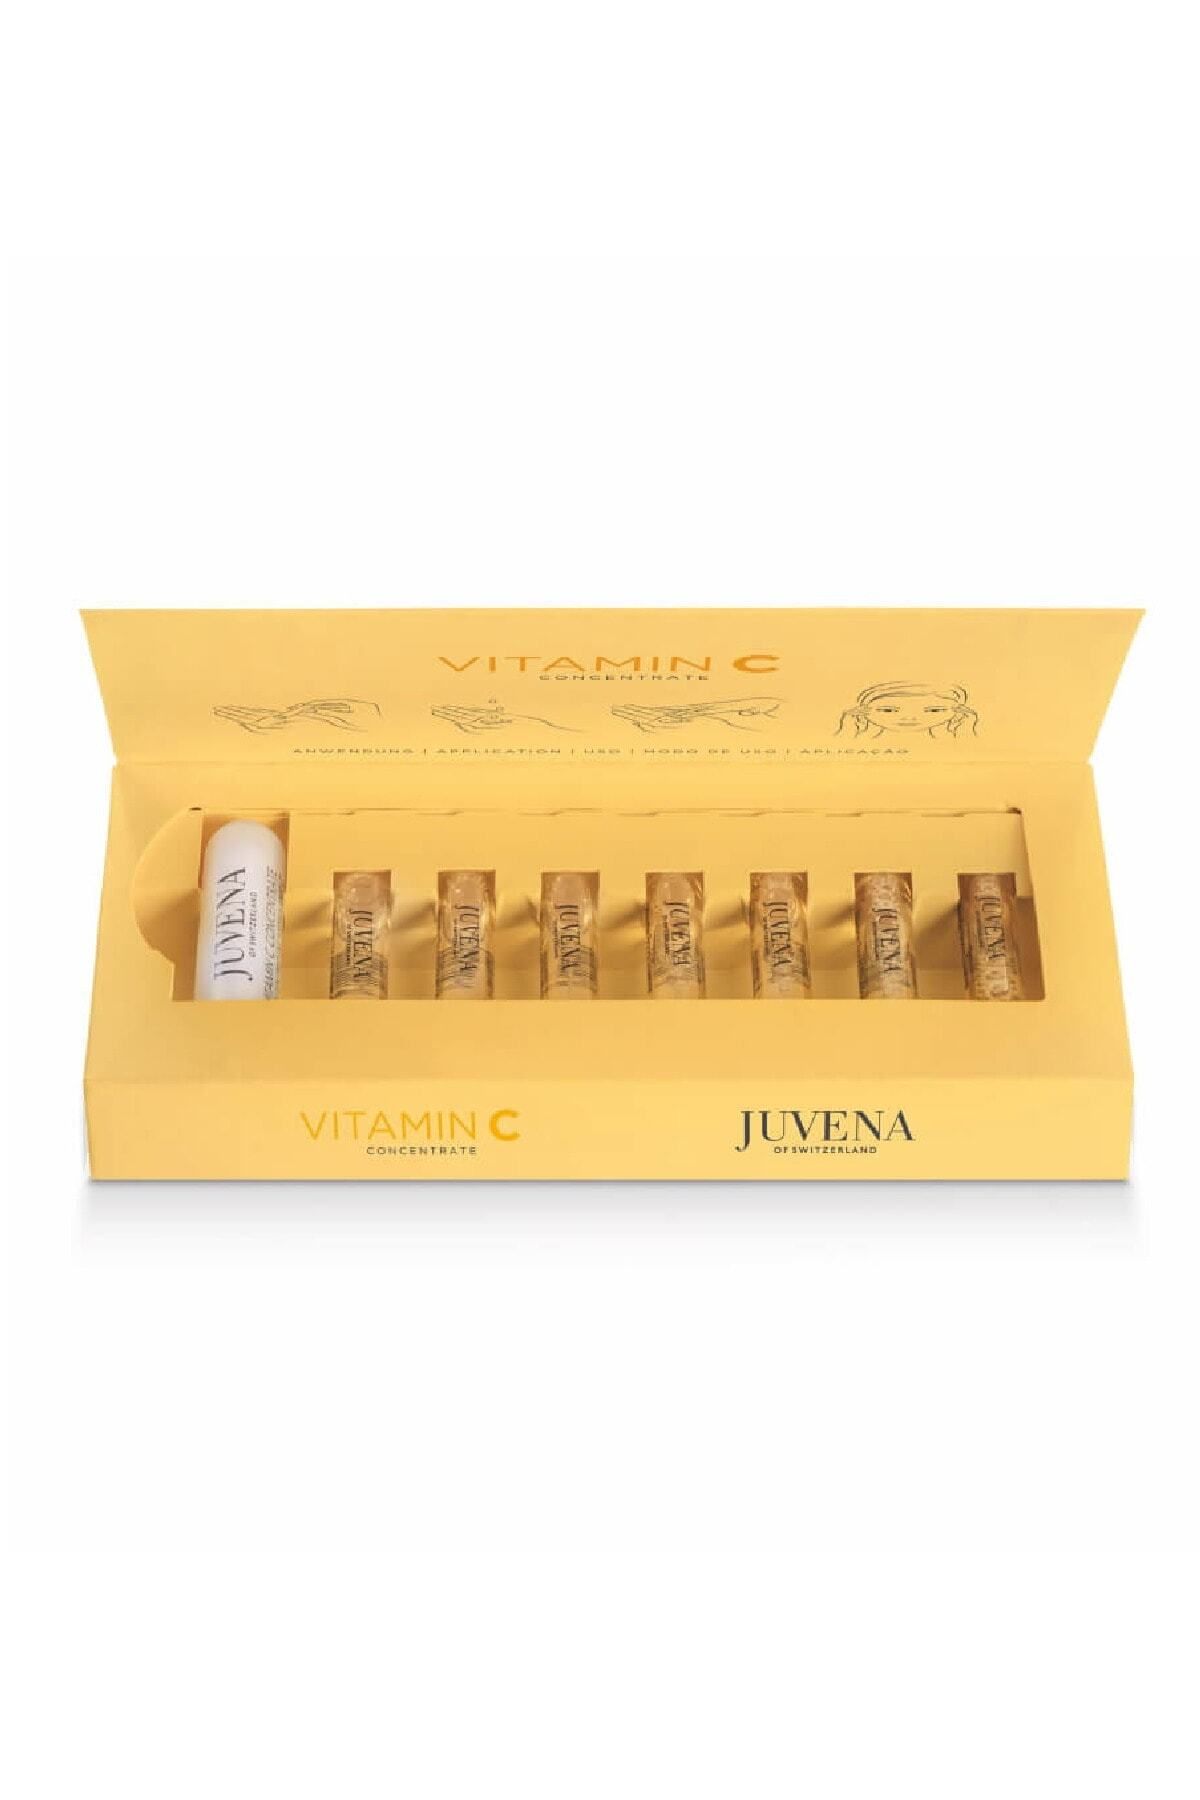 Juvena Vitamin C Concentrated Anti-Aging Brightening Serum 7x50mg Renewal39